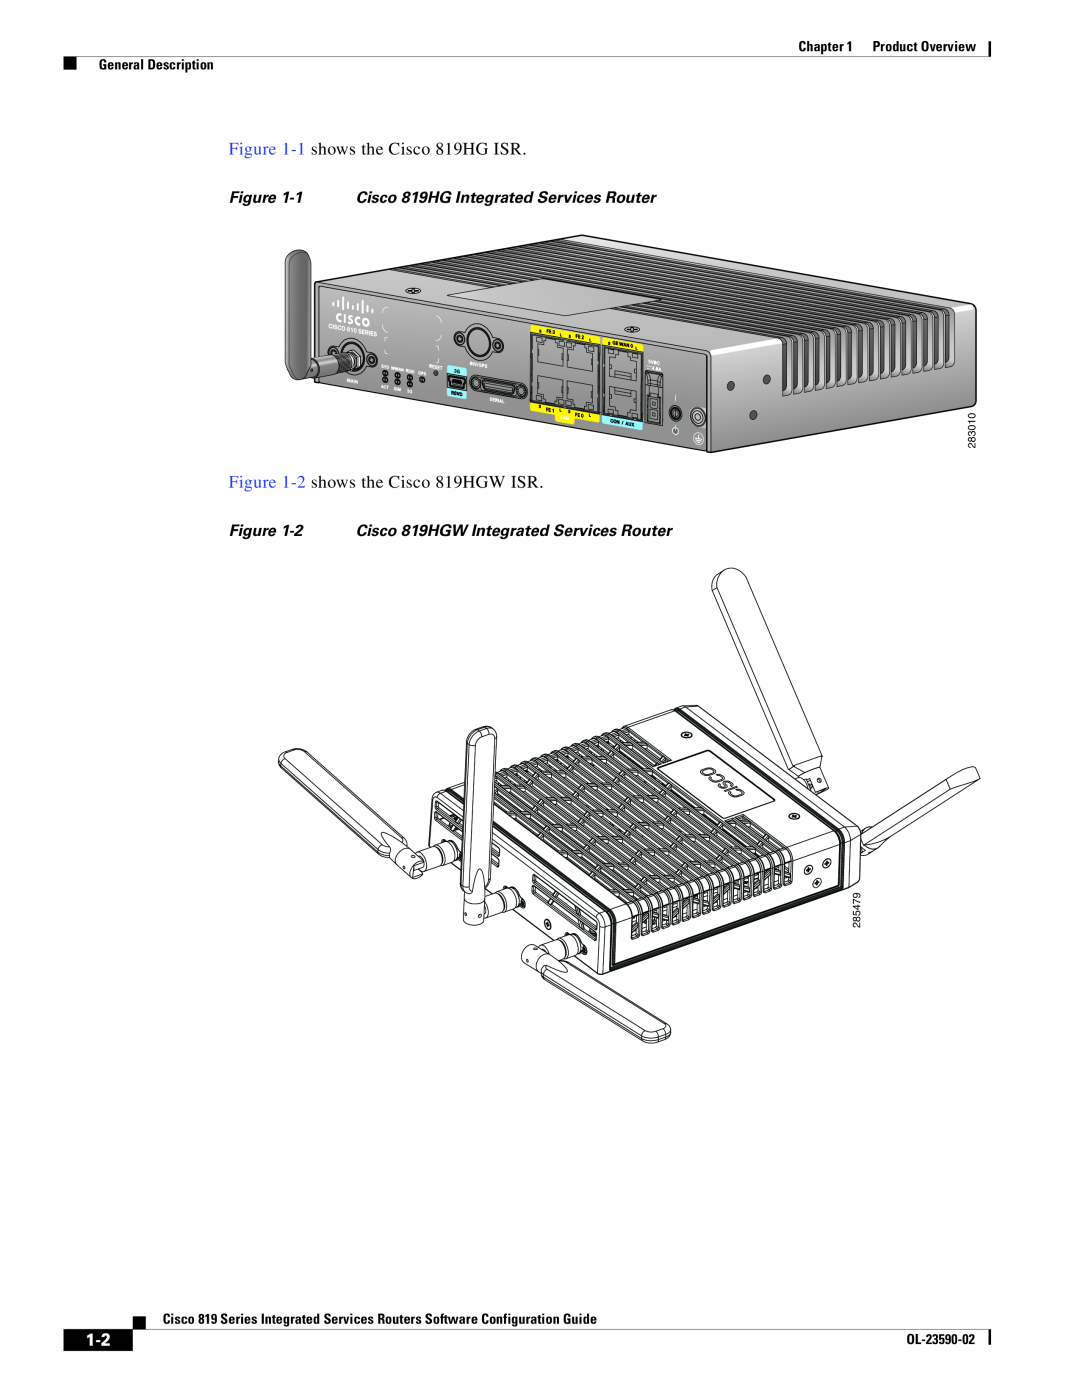 Cisco Systems C819GUK9 1 Cisco 819HG Integrated Services Router, 2 Cisco 819HGW Integrated Services Router, OL-23590-02 